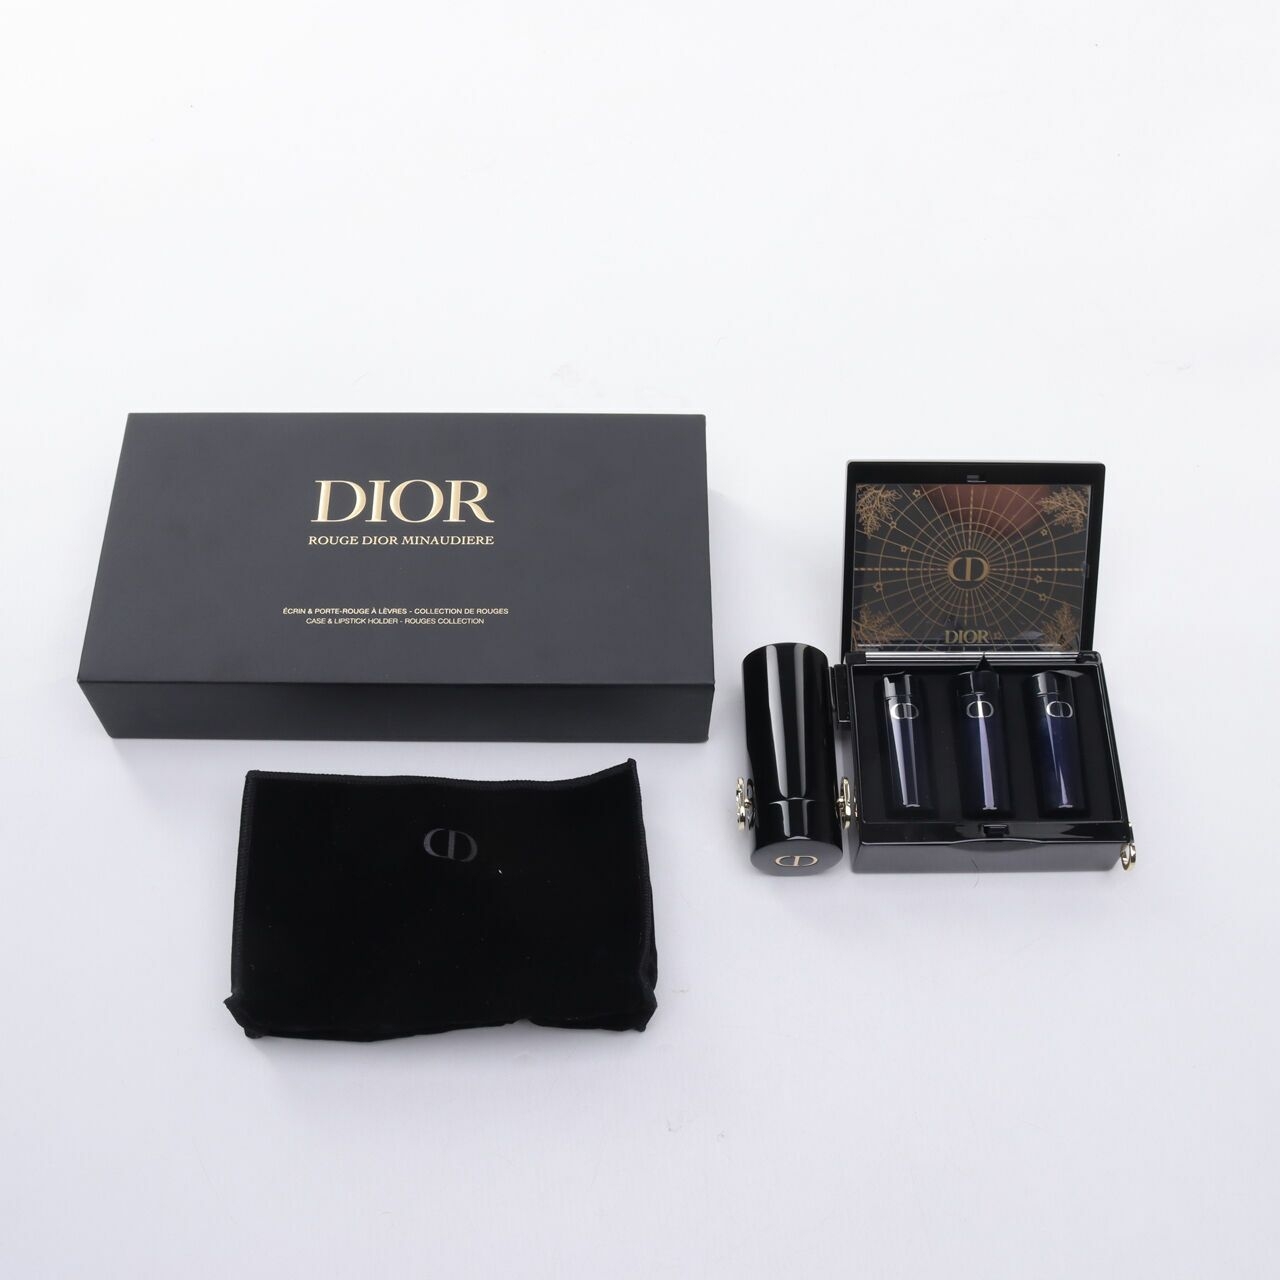 Rouge Dior Minaudiere Clutch and Lipstick Set